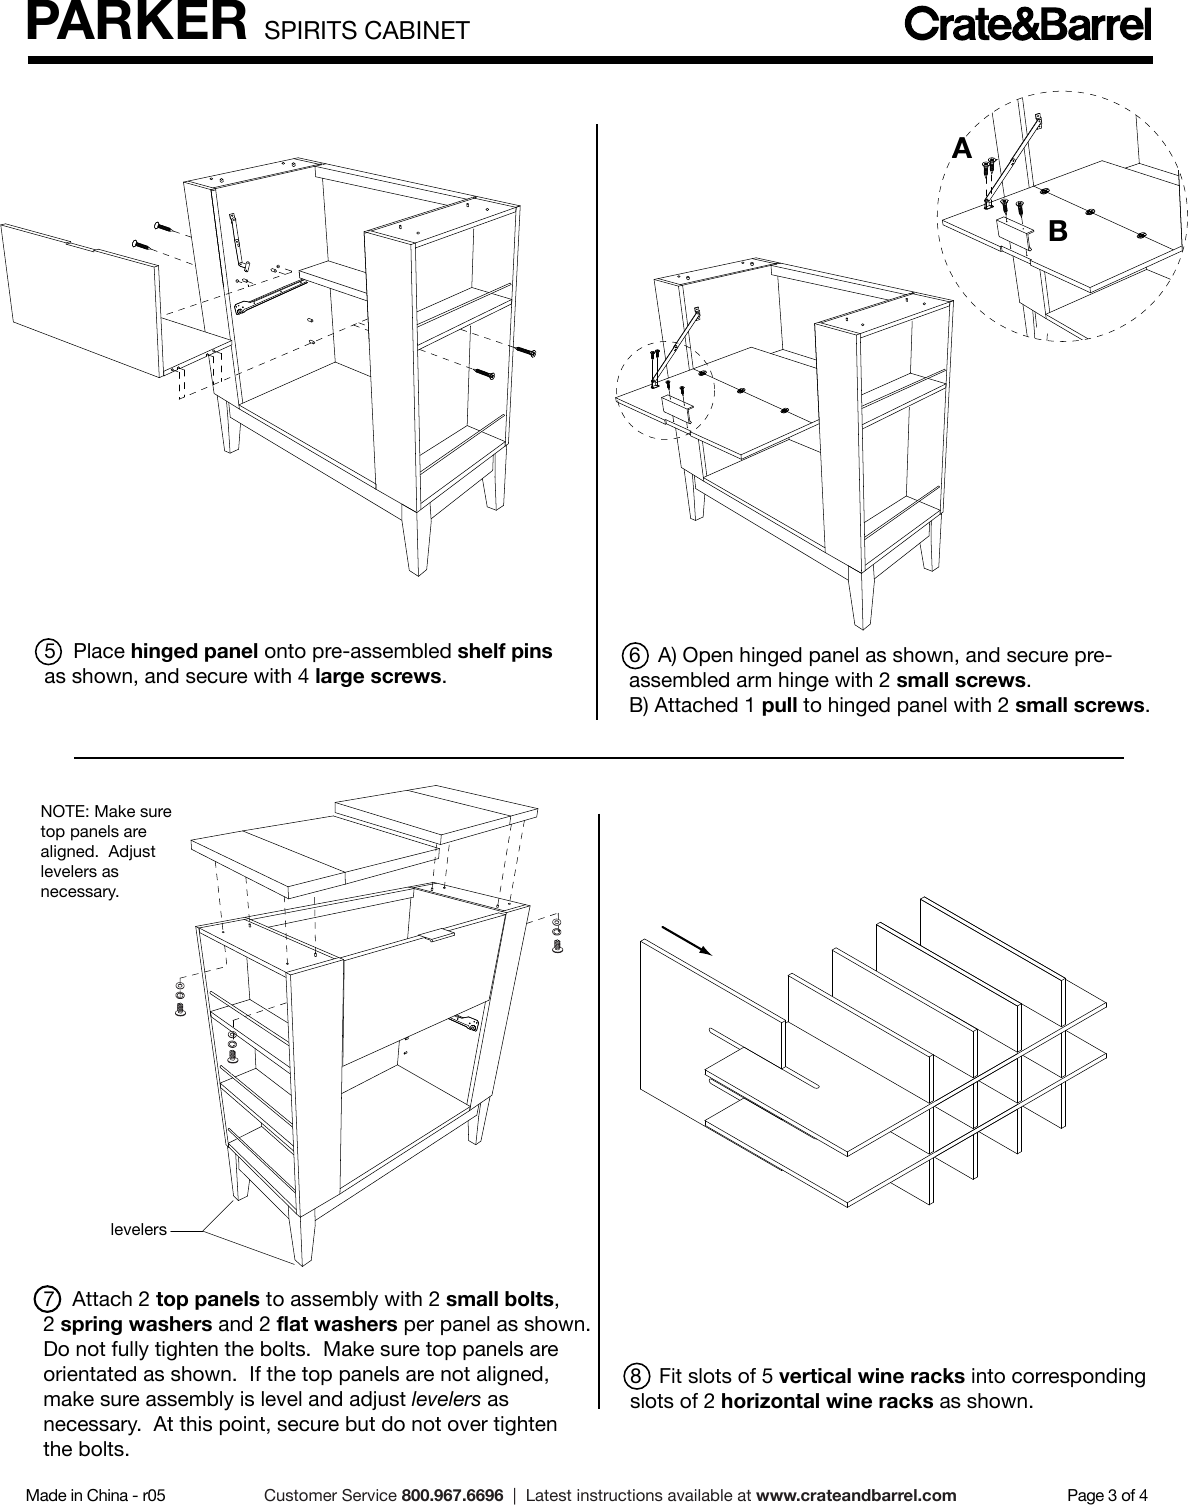 Page 3 of 4 - Crate-Barrel 760-Parker-Spirits-Cabinet